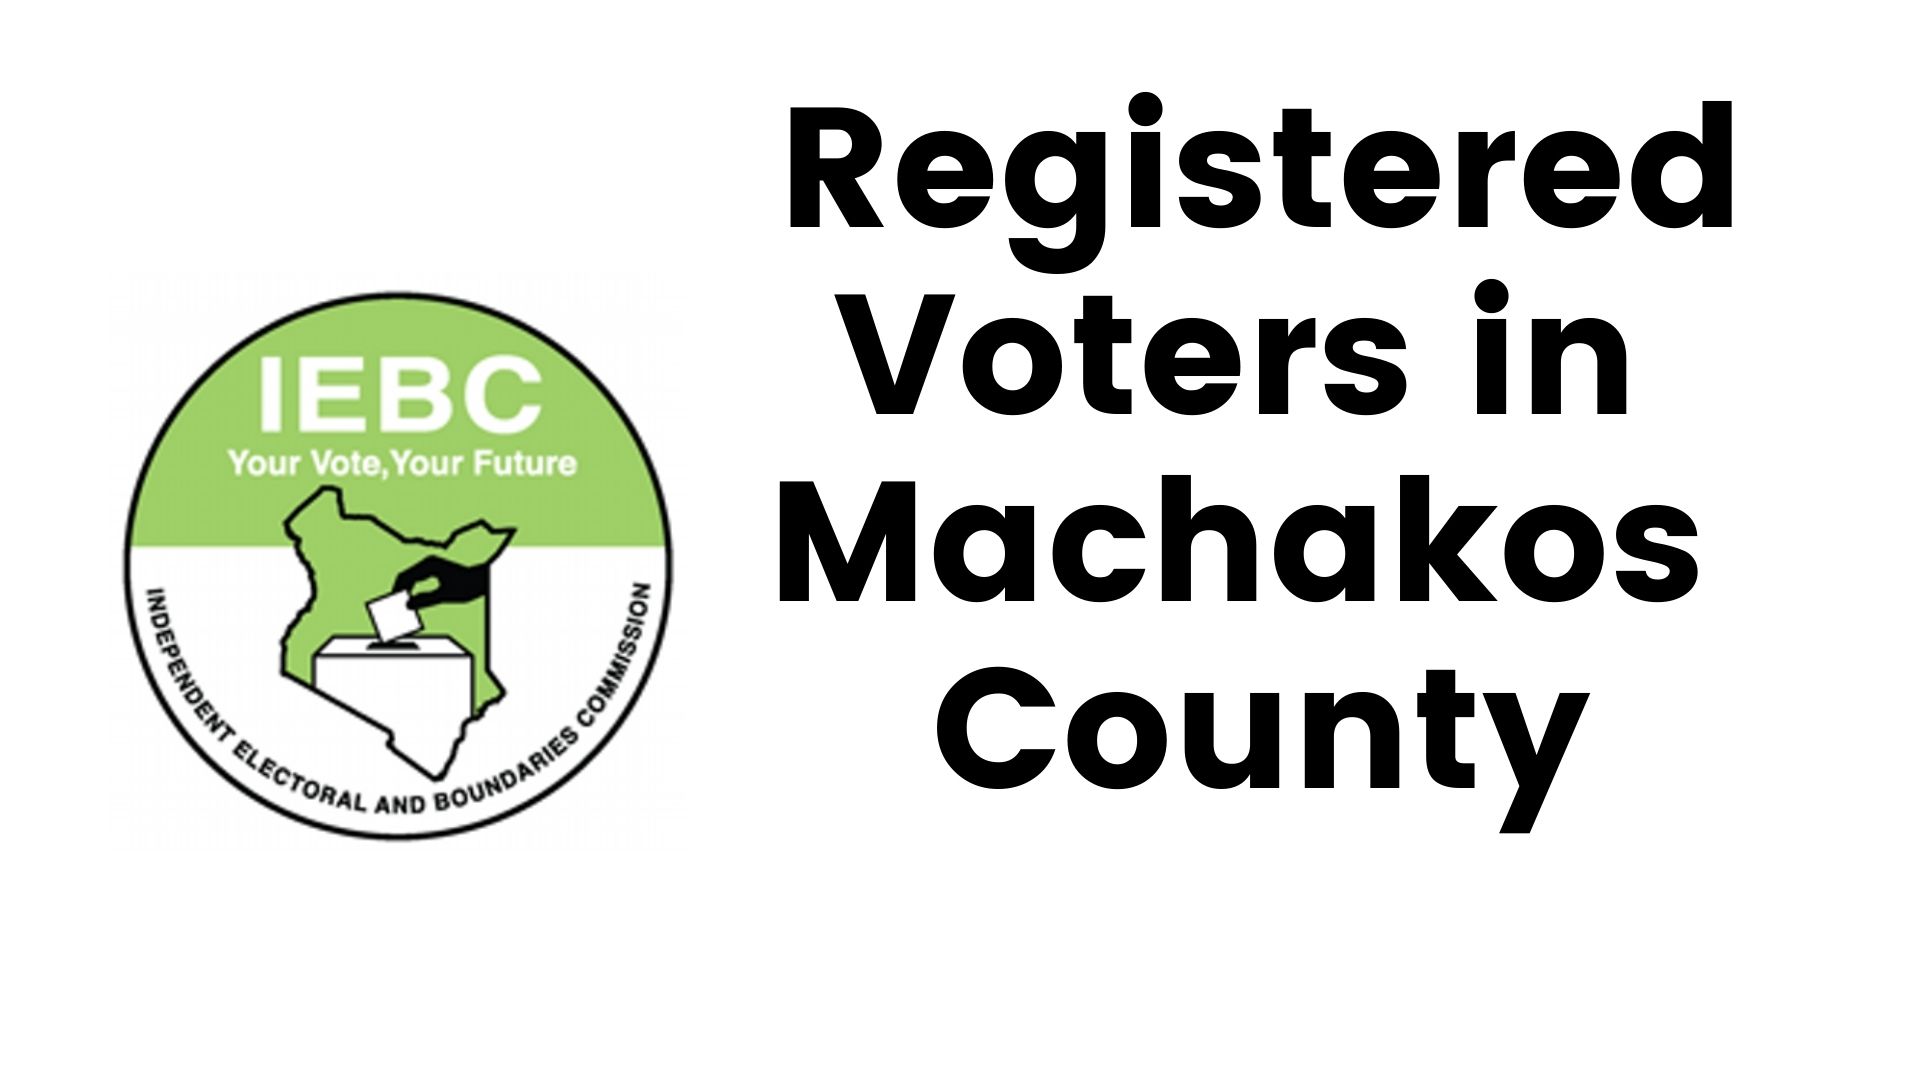 IEBC Machakos County Registered Voters